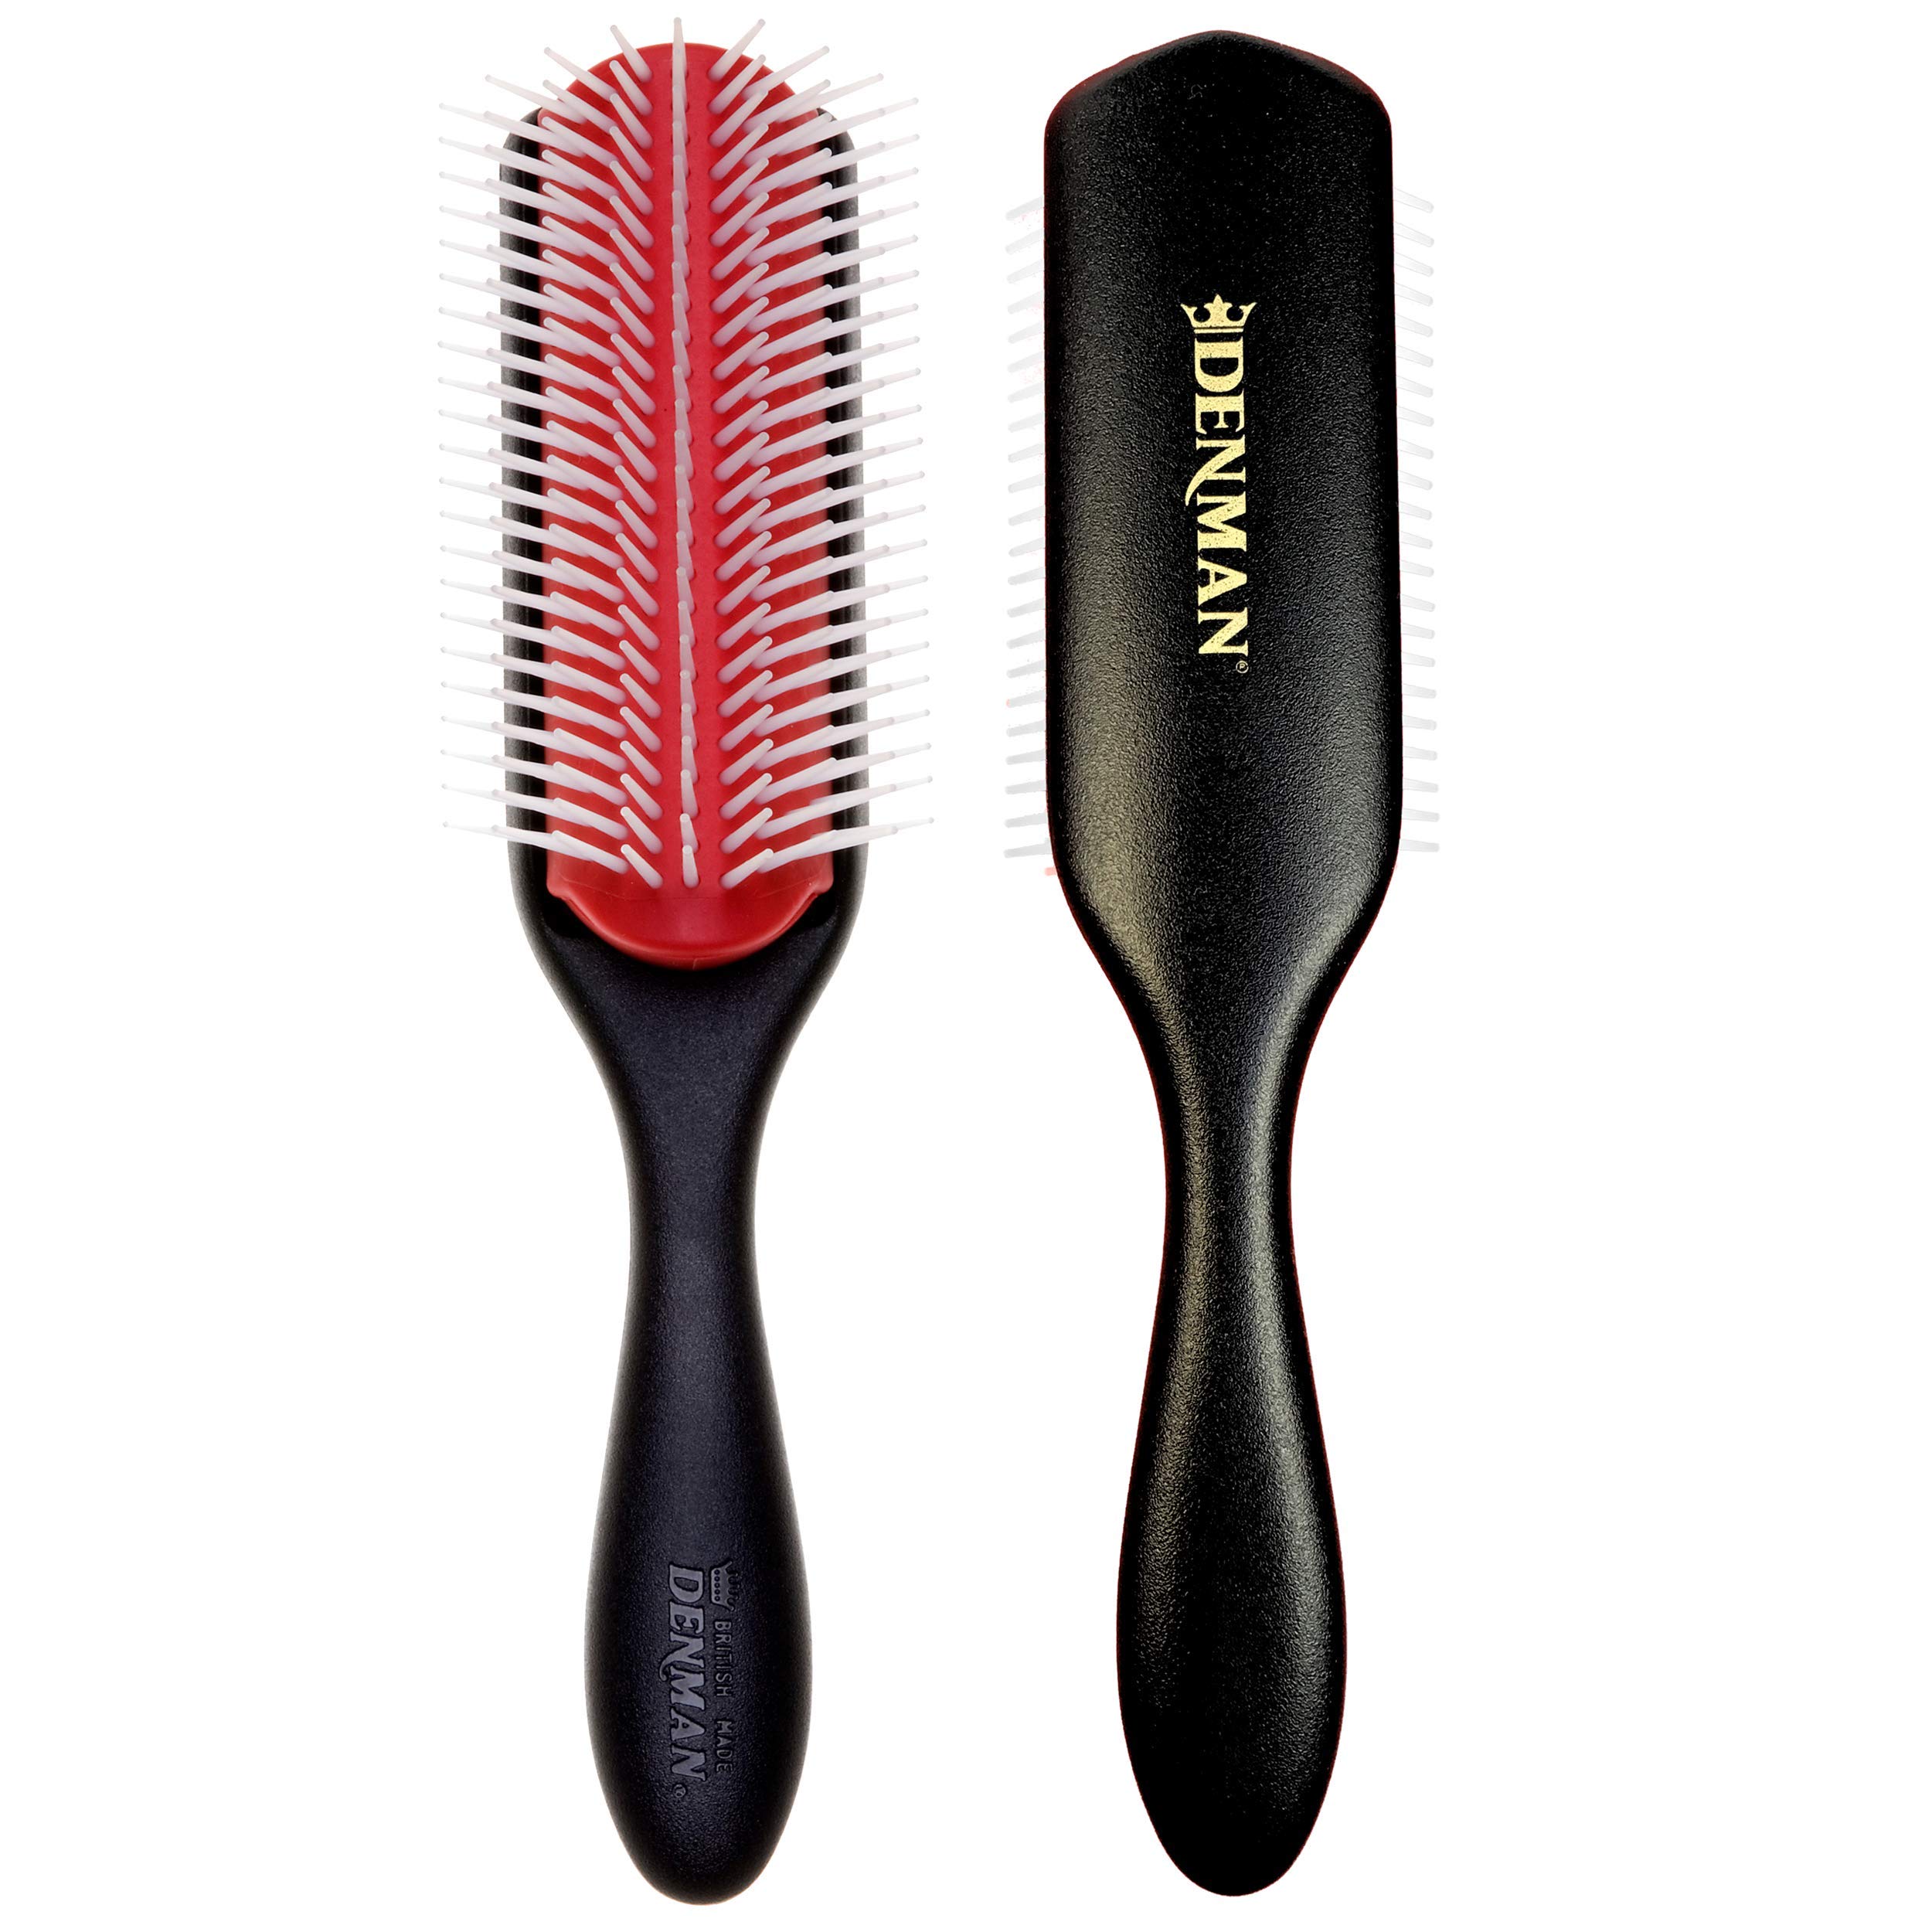 Mua Denman Hair Brush for Curly Hair D5 - Heavyweight 9 Row Classic Styling  Brush for Styling – Detangling, Separating, Shaping and Defining Curls trên  Amazon Mỹ chính hãng 2023 | Fado